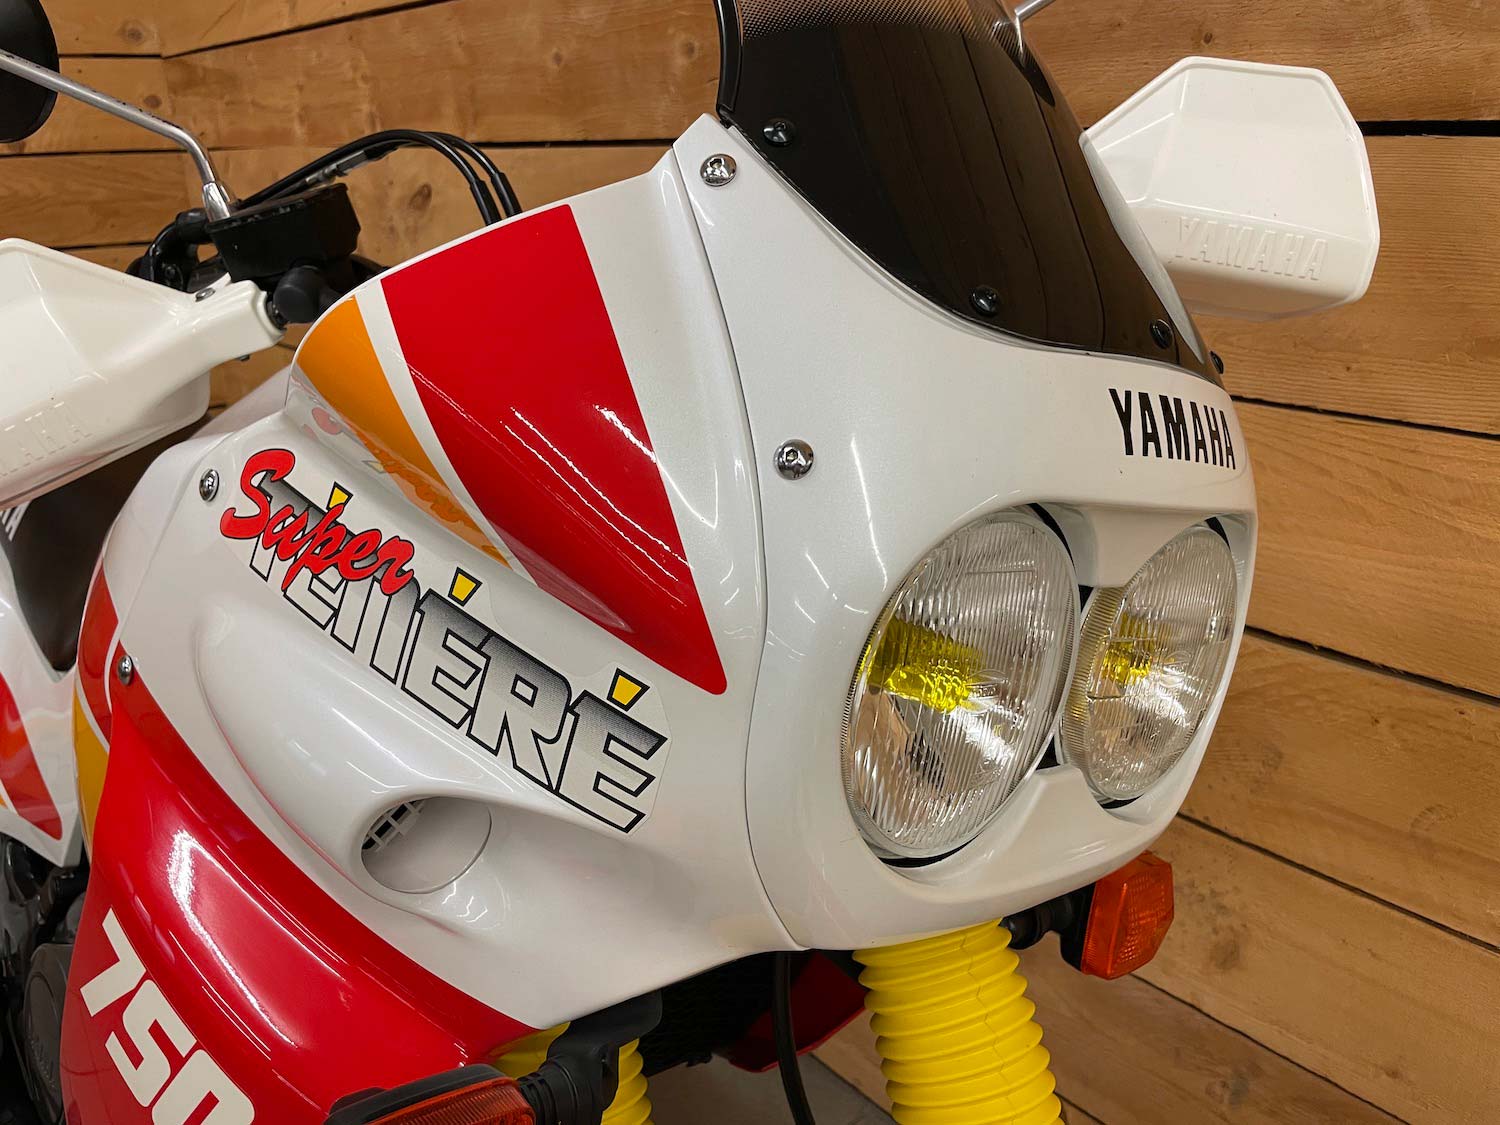 Yamaha_XTZ_750_cezanne_classic_motorcycles_5-142.jpg